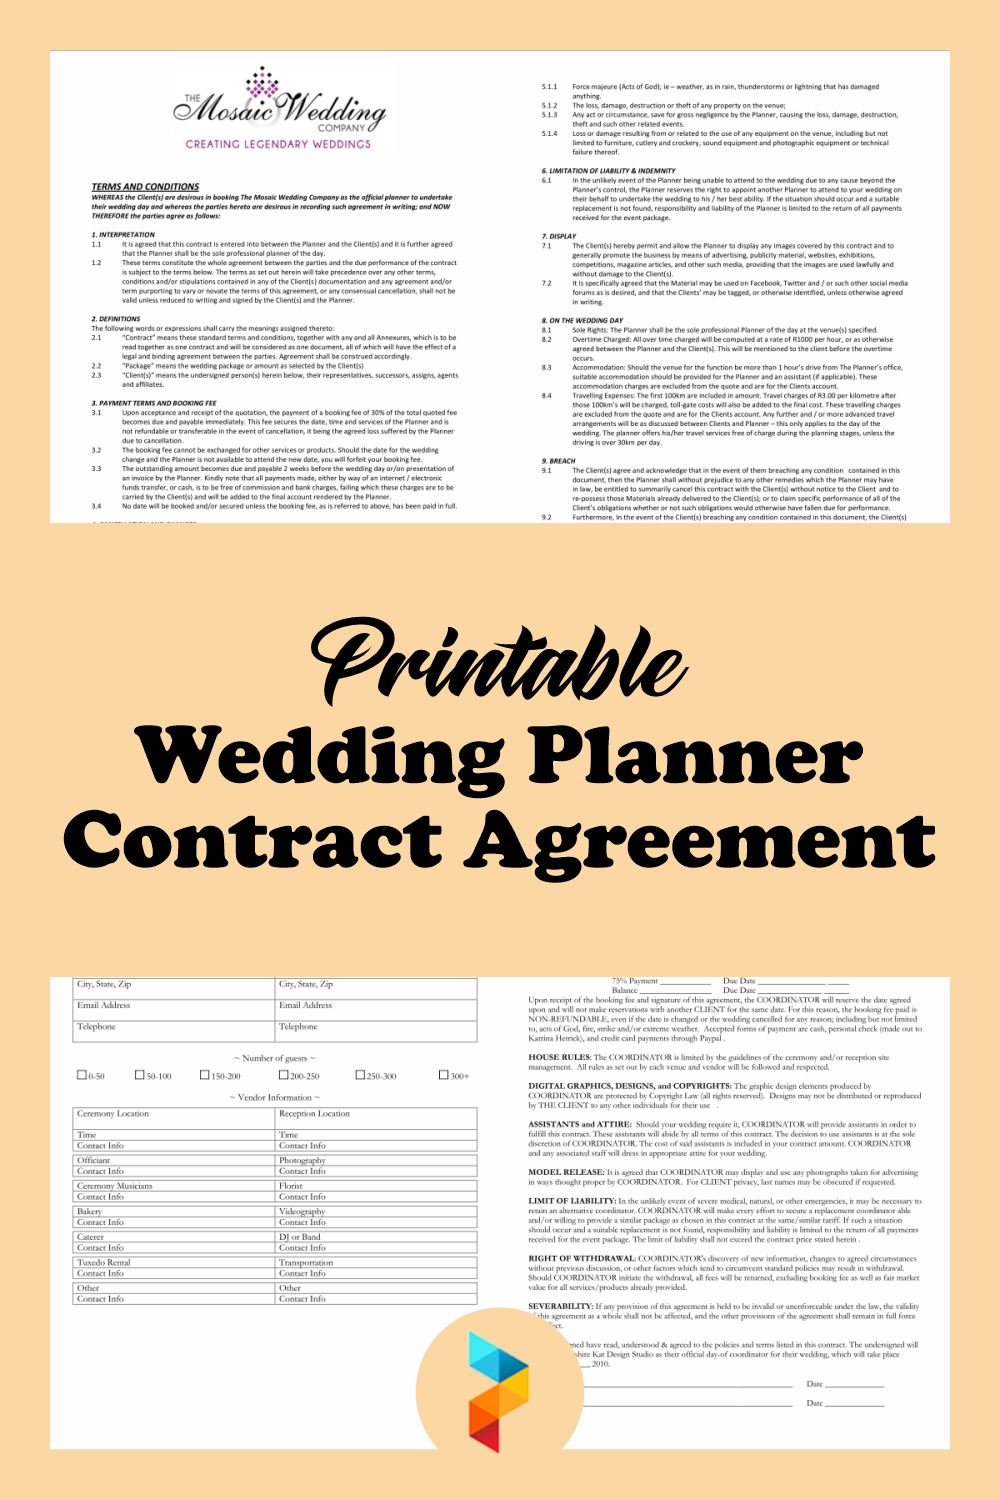 Printable Wedding Planner Contract Agreement